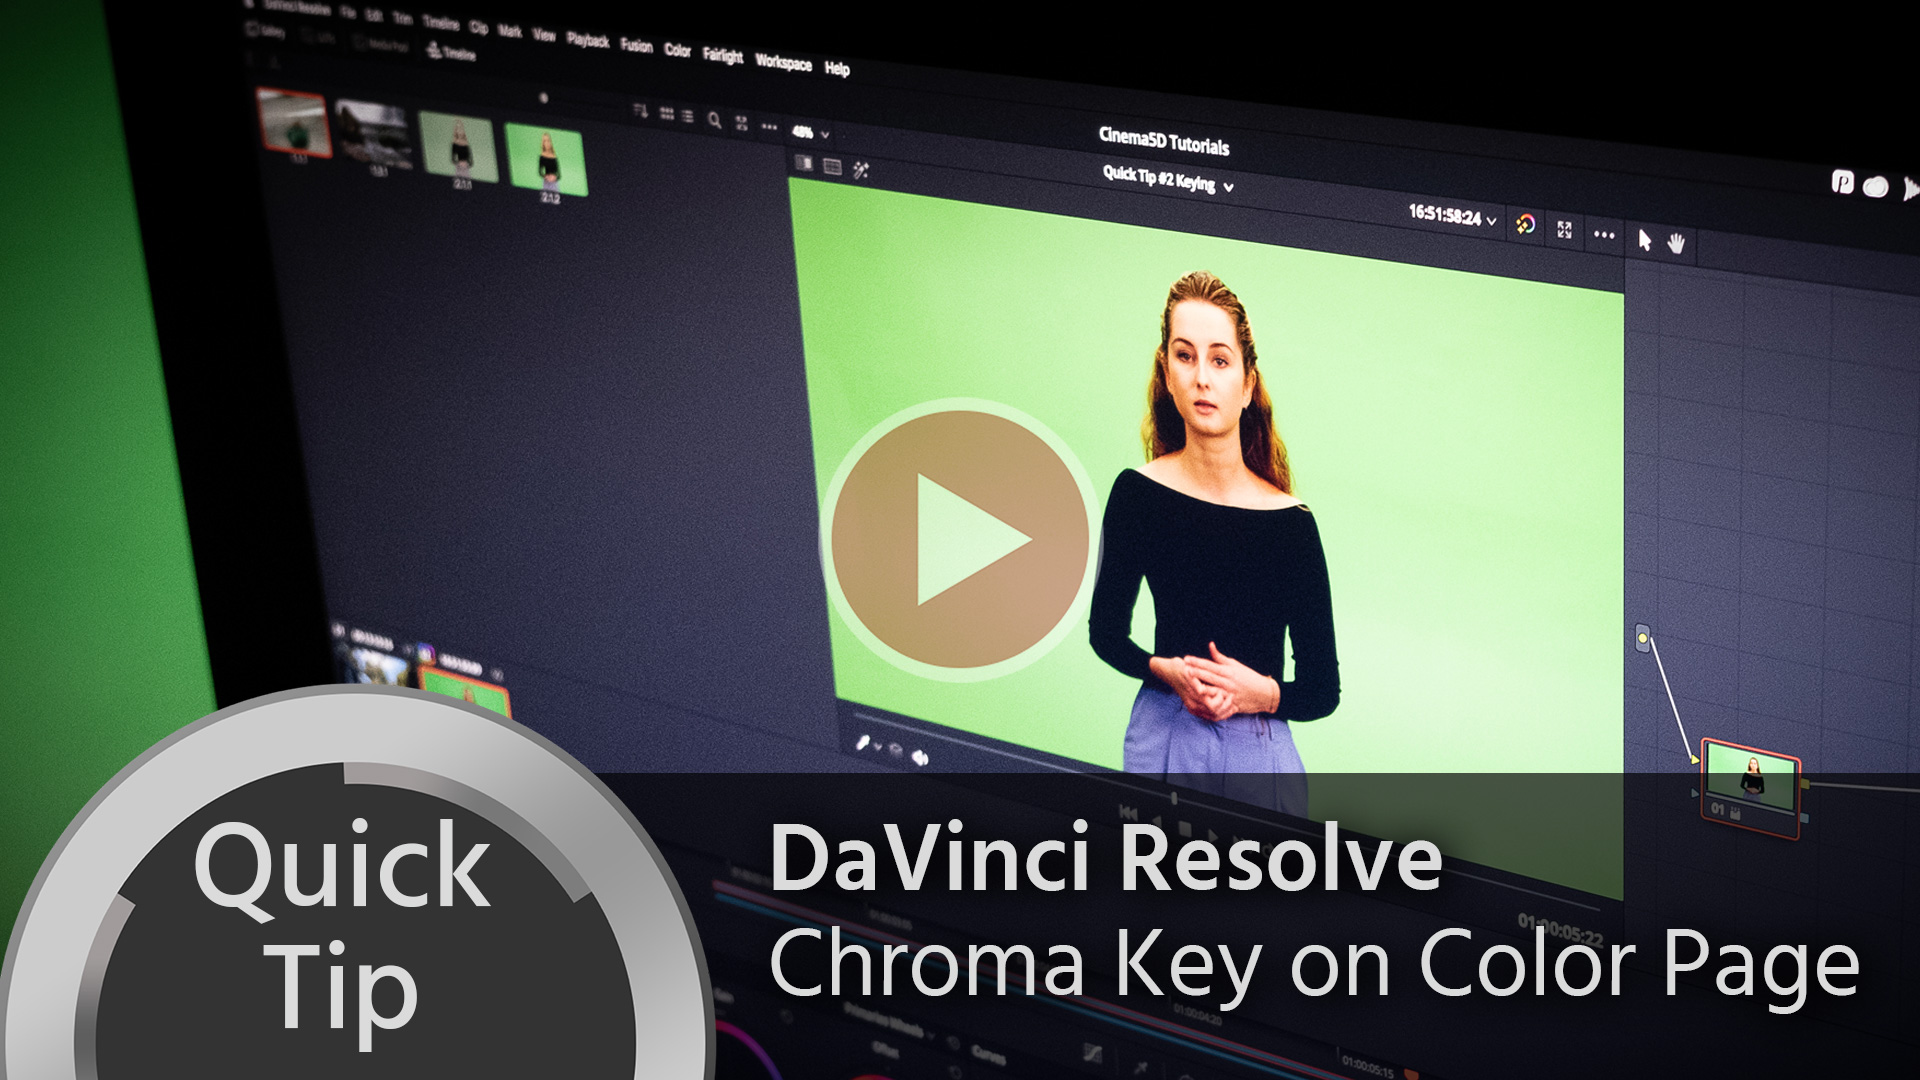 Quick Tip: DaVinci Resolveのクロマキーの使用法